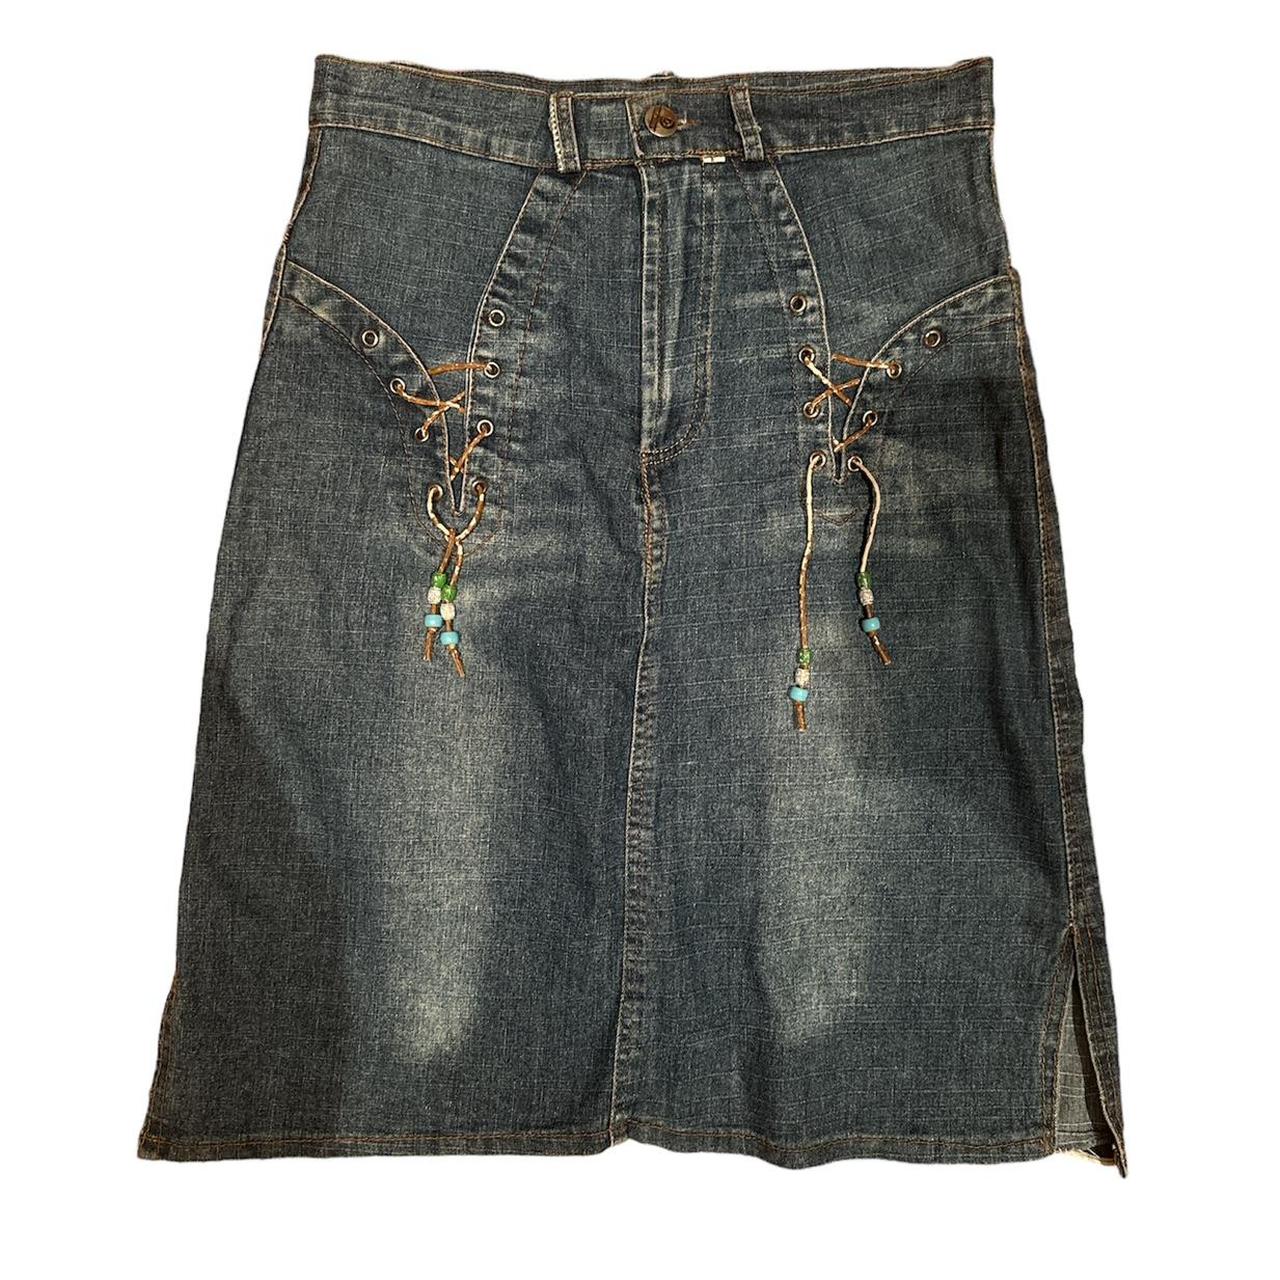 Vintage denim midi skirt with bead tie detailing on...